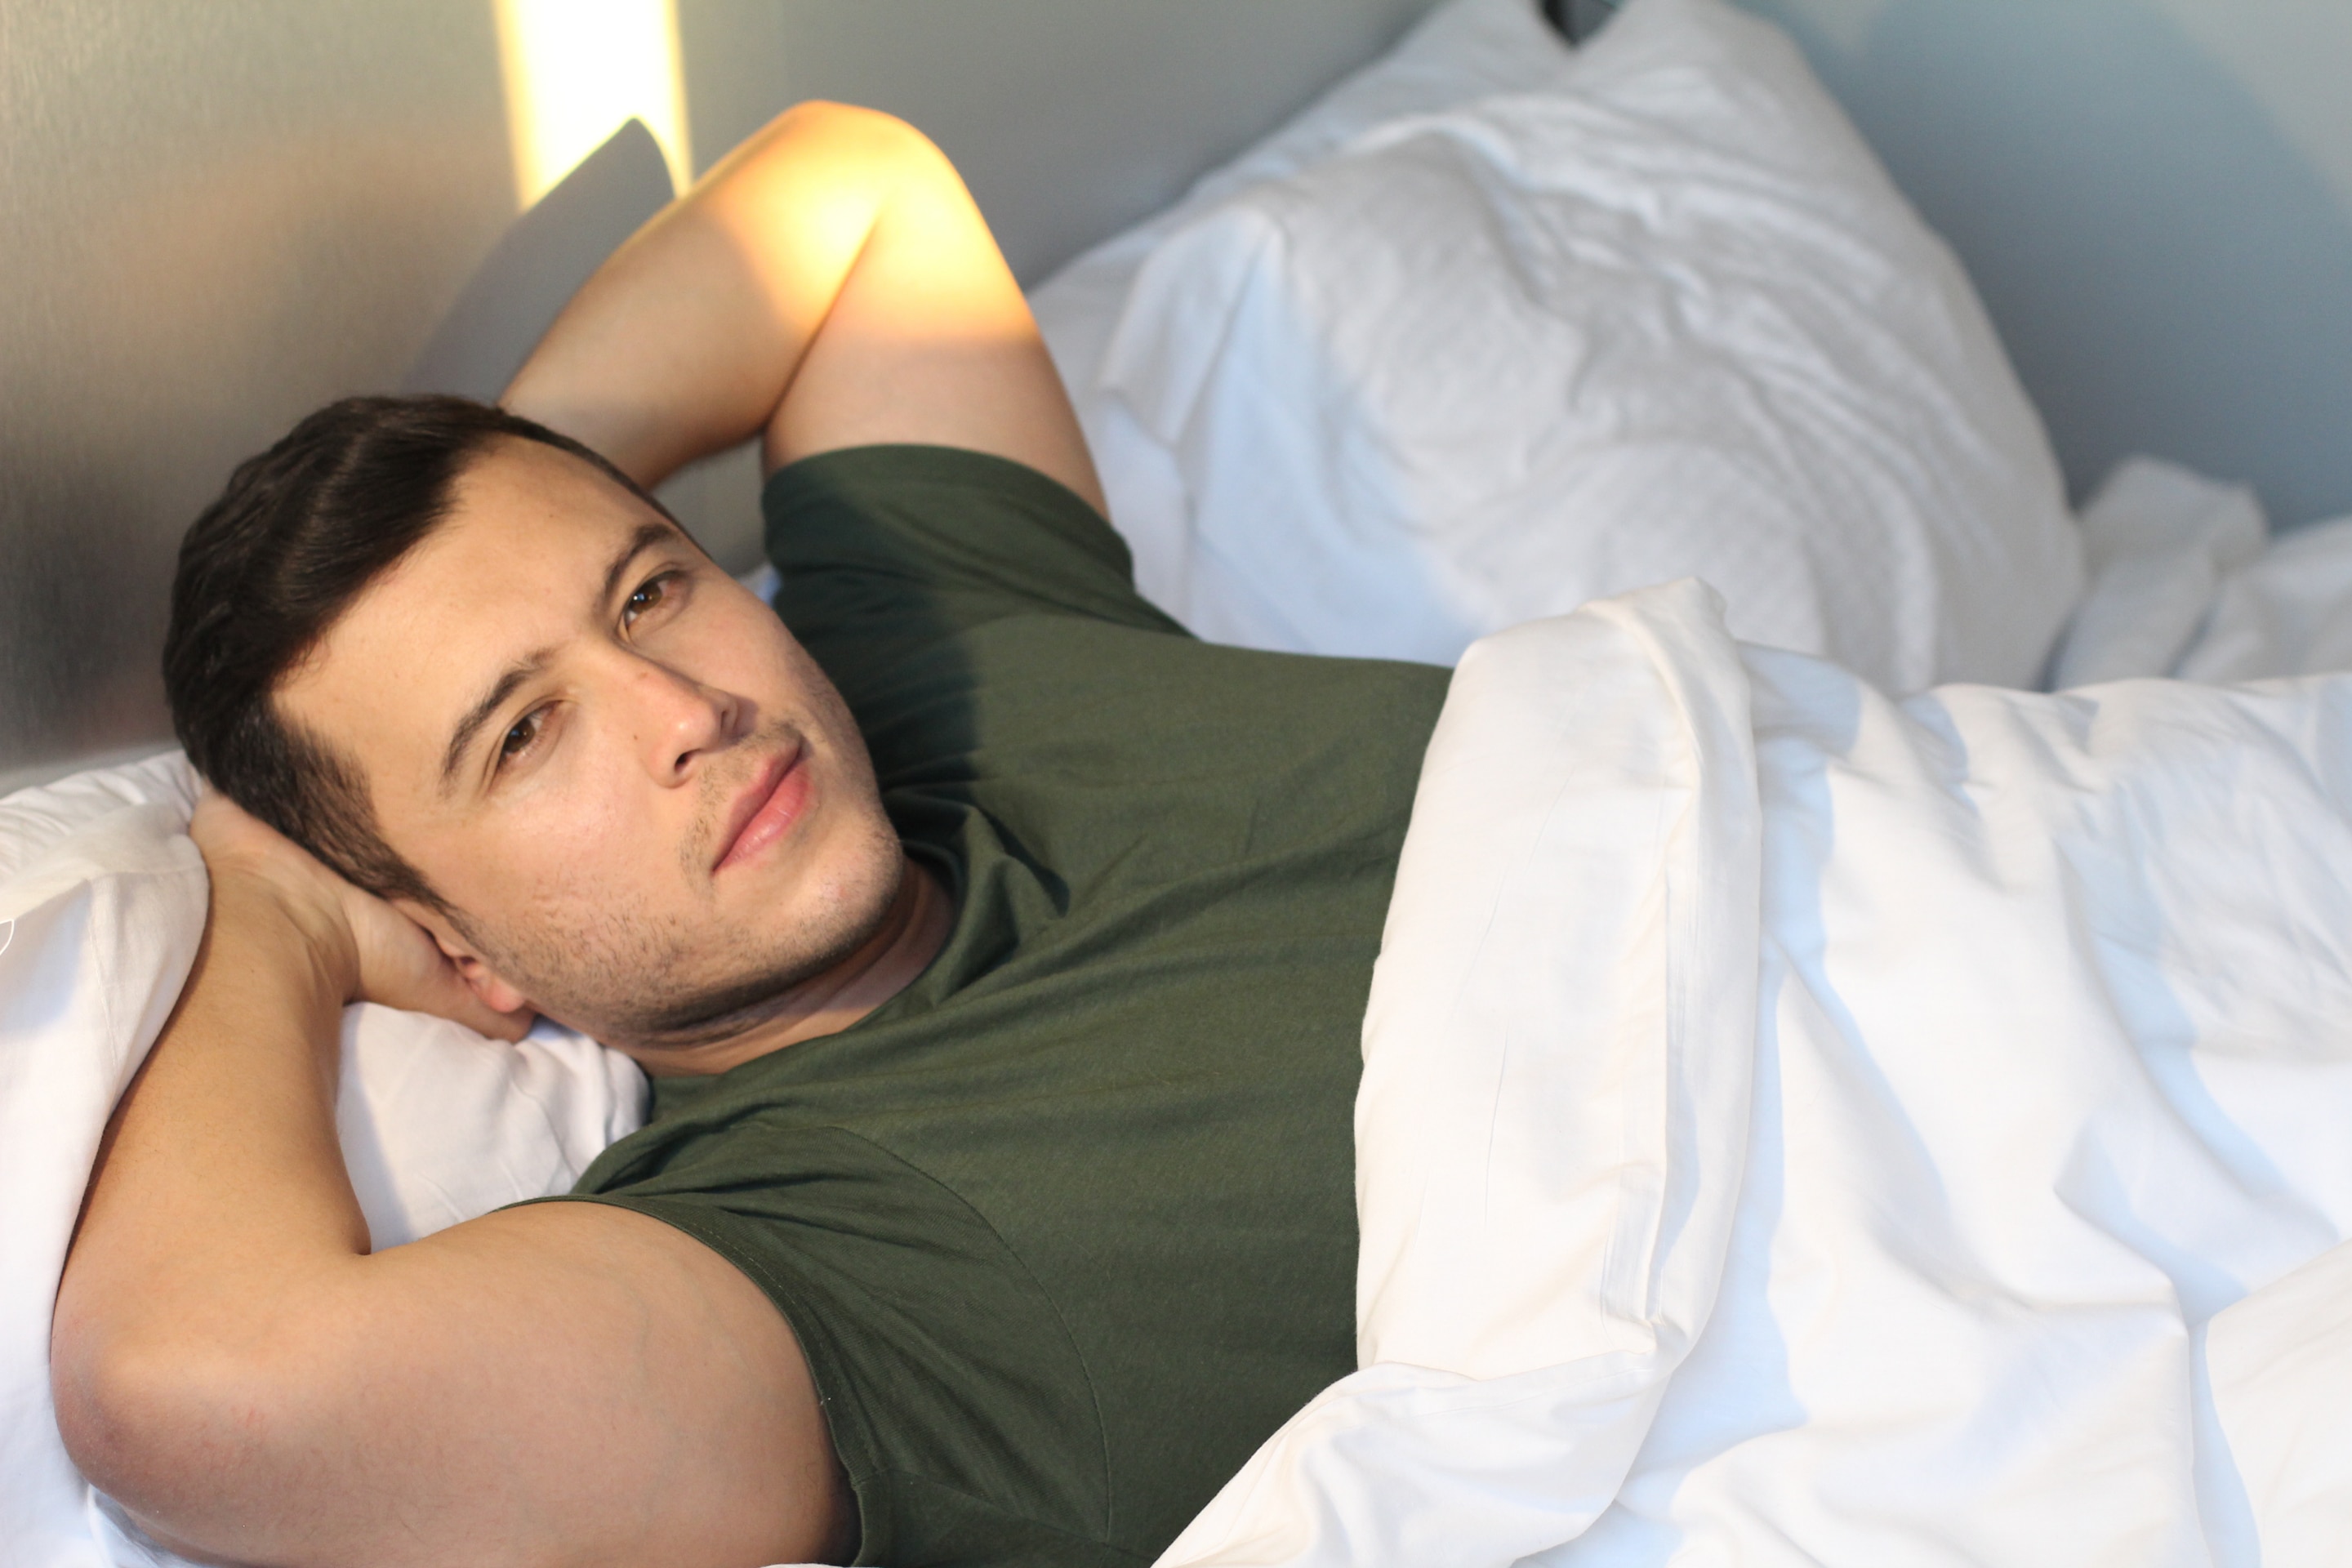 Фото мужчин домашние дома в кровати крупным планом. Фото мужчин 30-40 в кровати домашние. Мужчина в возрасте на кровати домашнее. Improve Sleep quality.